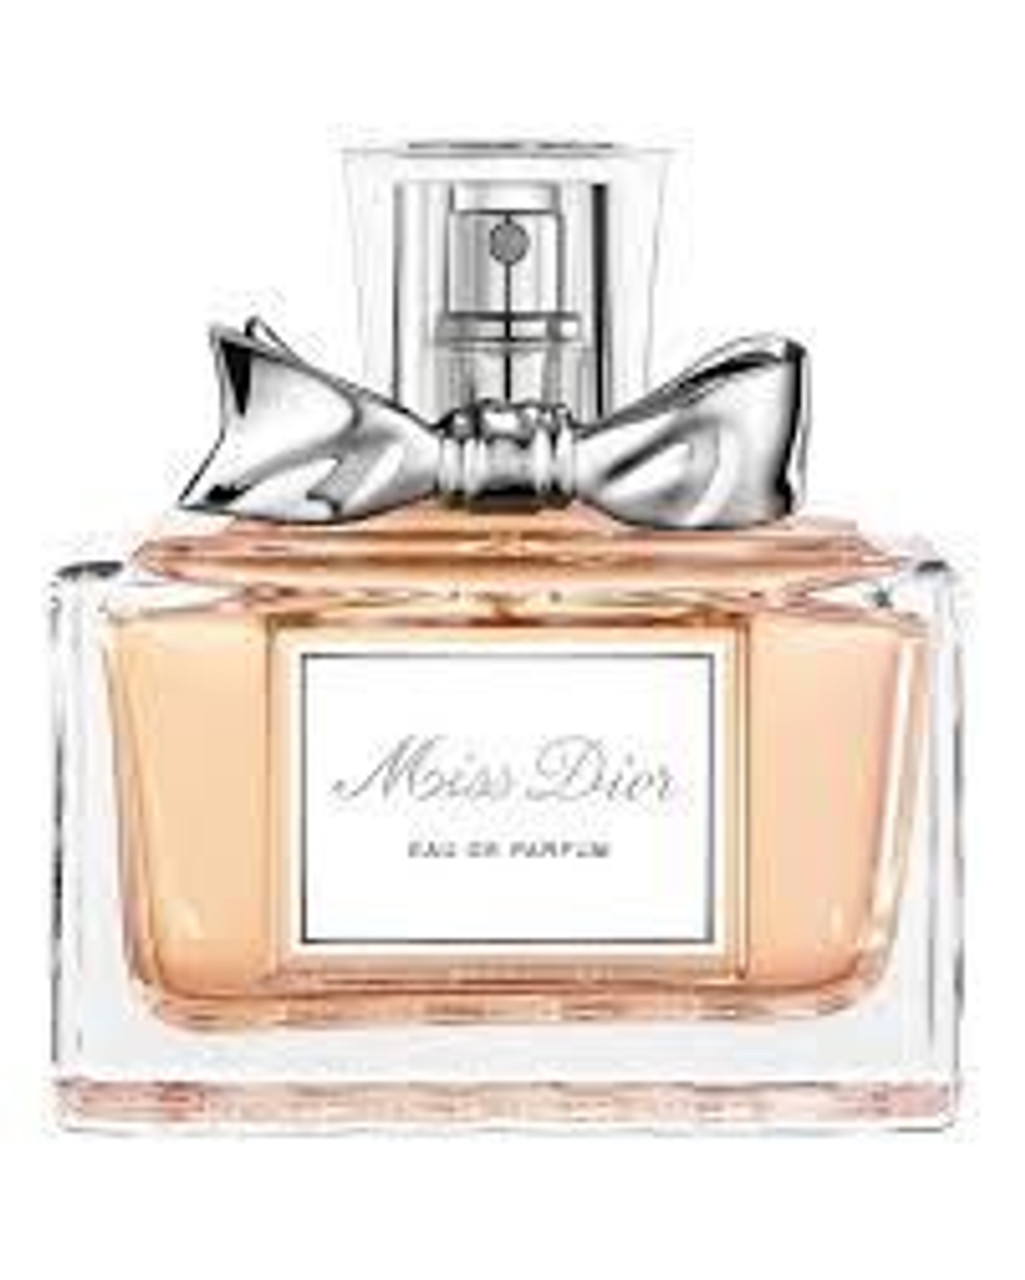 Christian Dior Miss Dior Cherie Eau De Parfum Spray 50ml/1.7oz buy